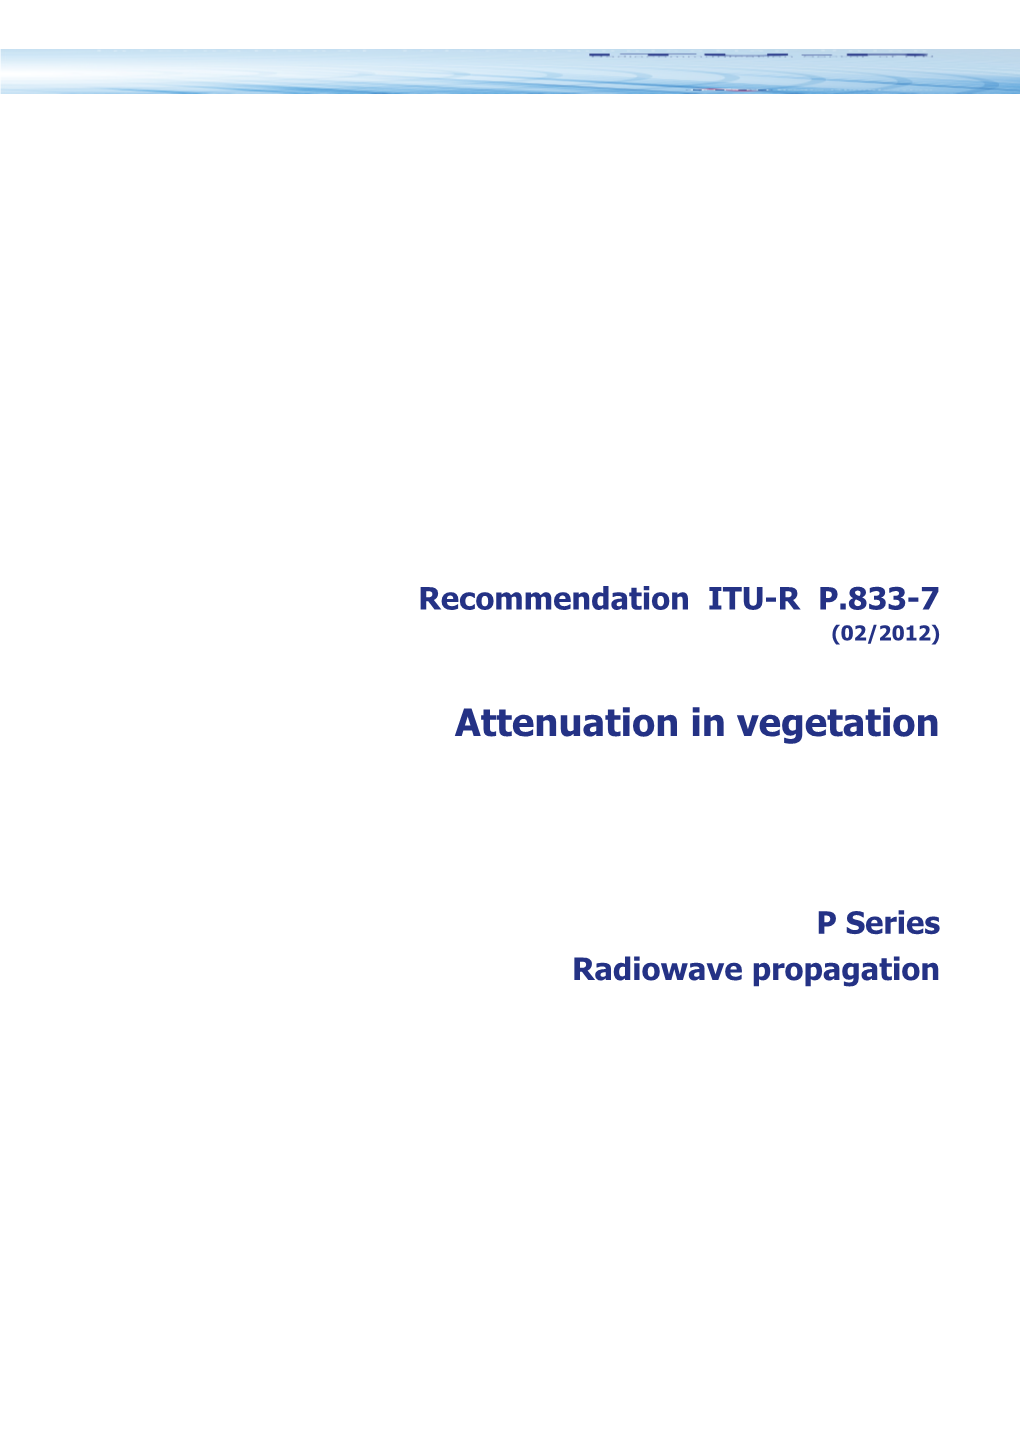 RECOMMENDATION ITU-R P.833-7 - Attenuation in Vegetation